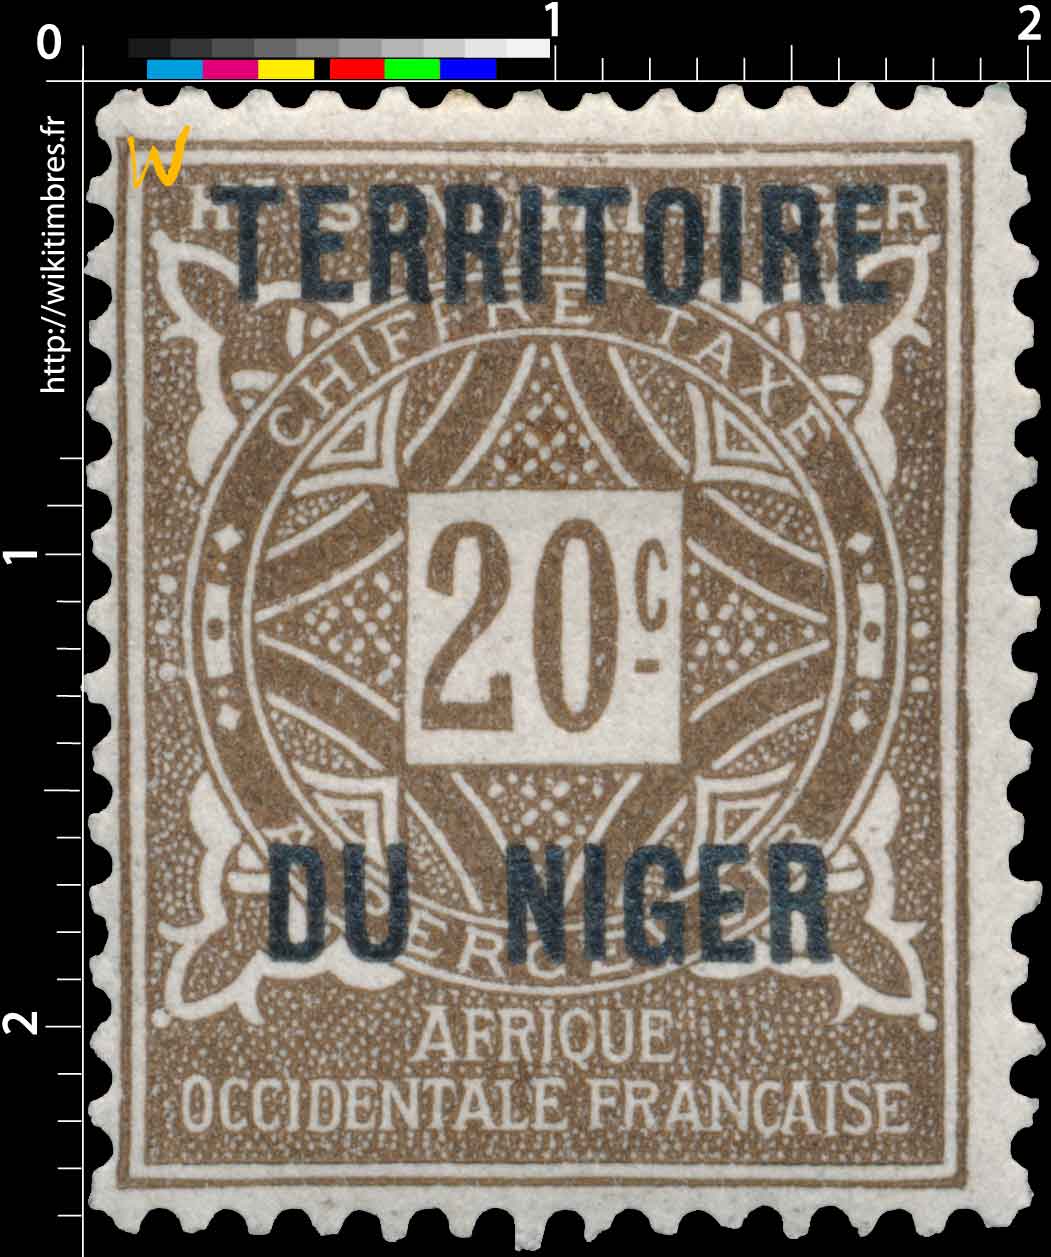 Niger - Chiffre Taxe à percevoir